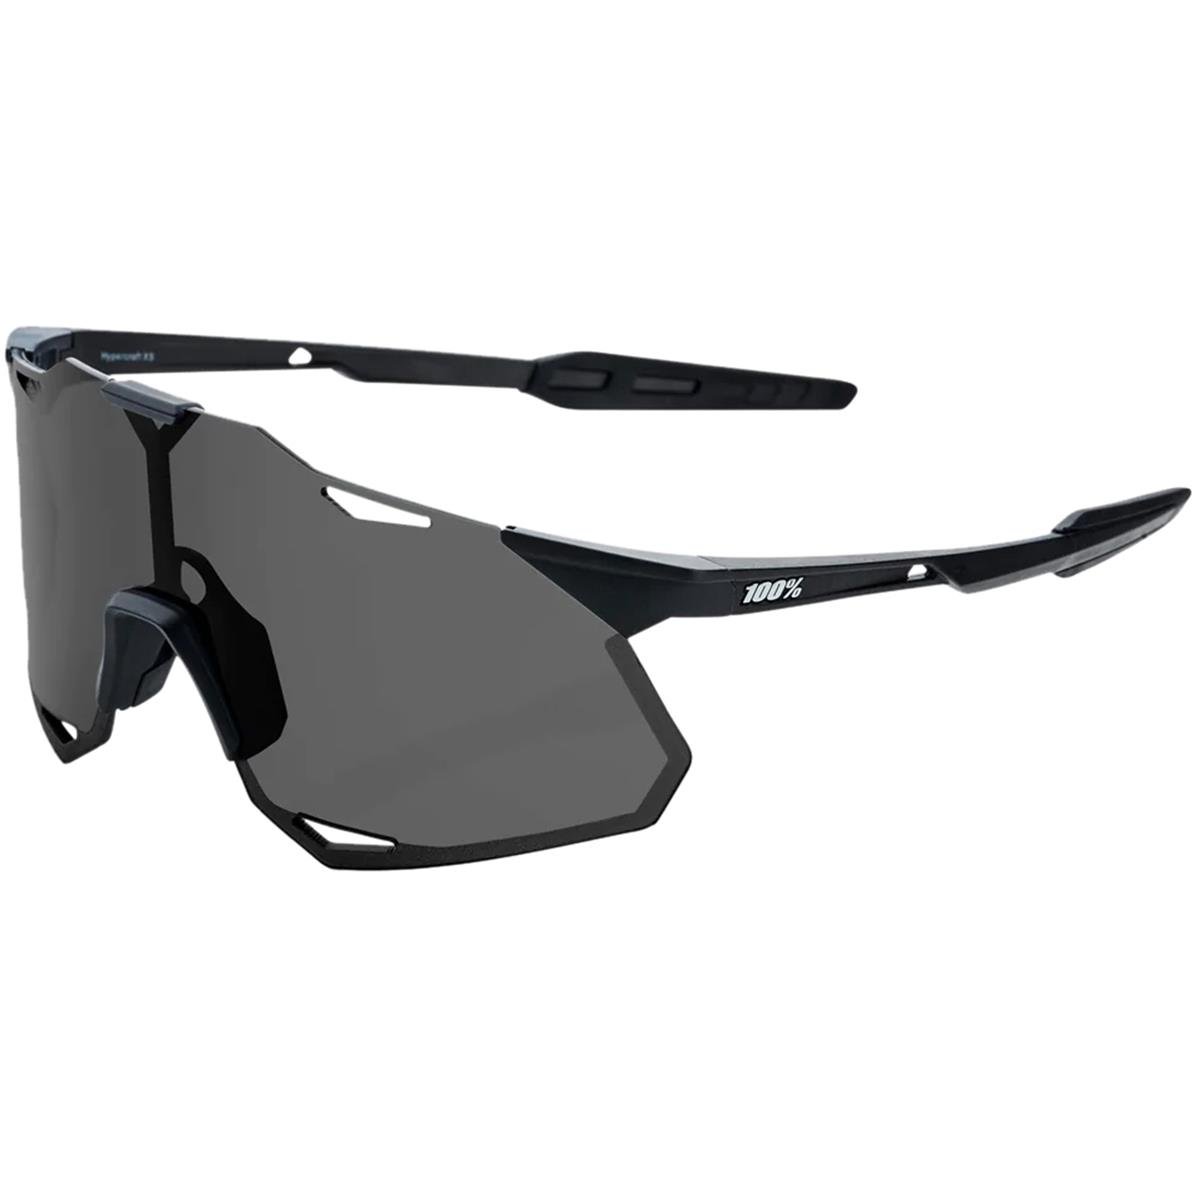 100% MTB Sport Glasses Hypercraft XS Matte Black - Smoke Lens